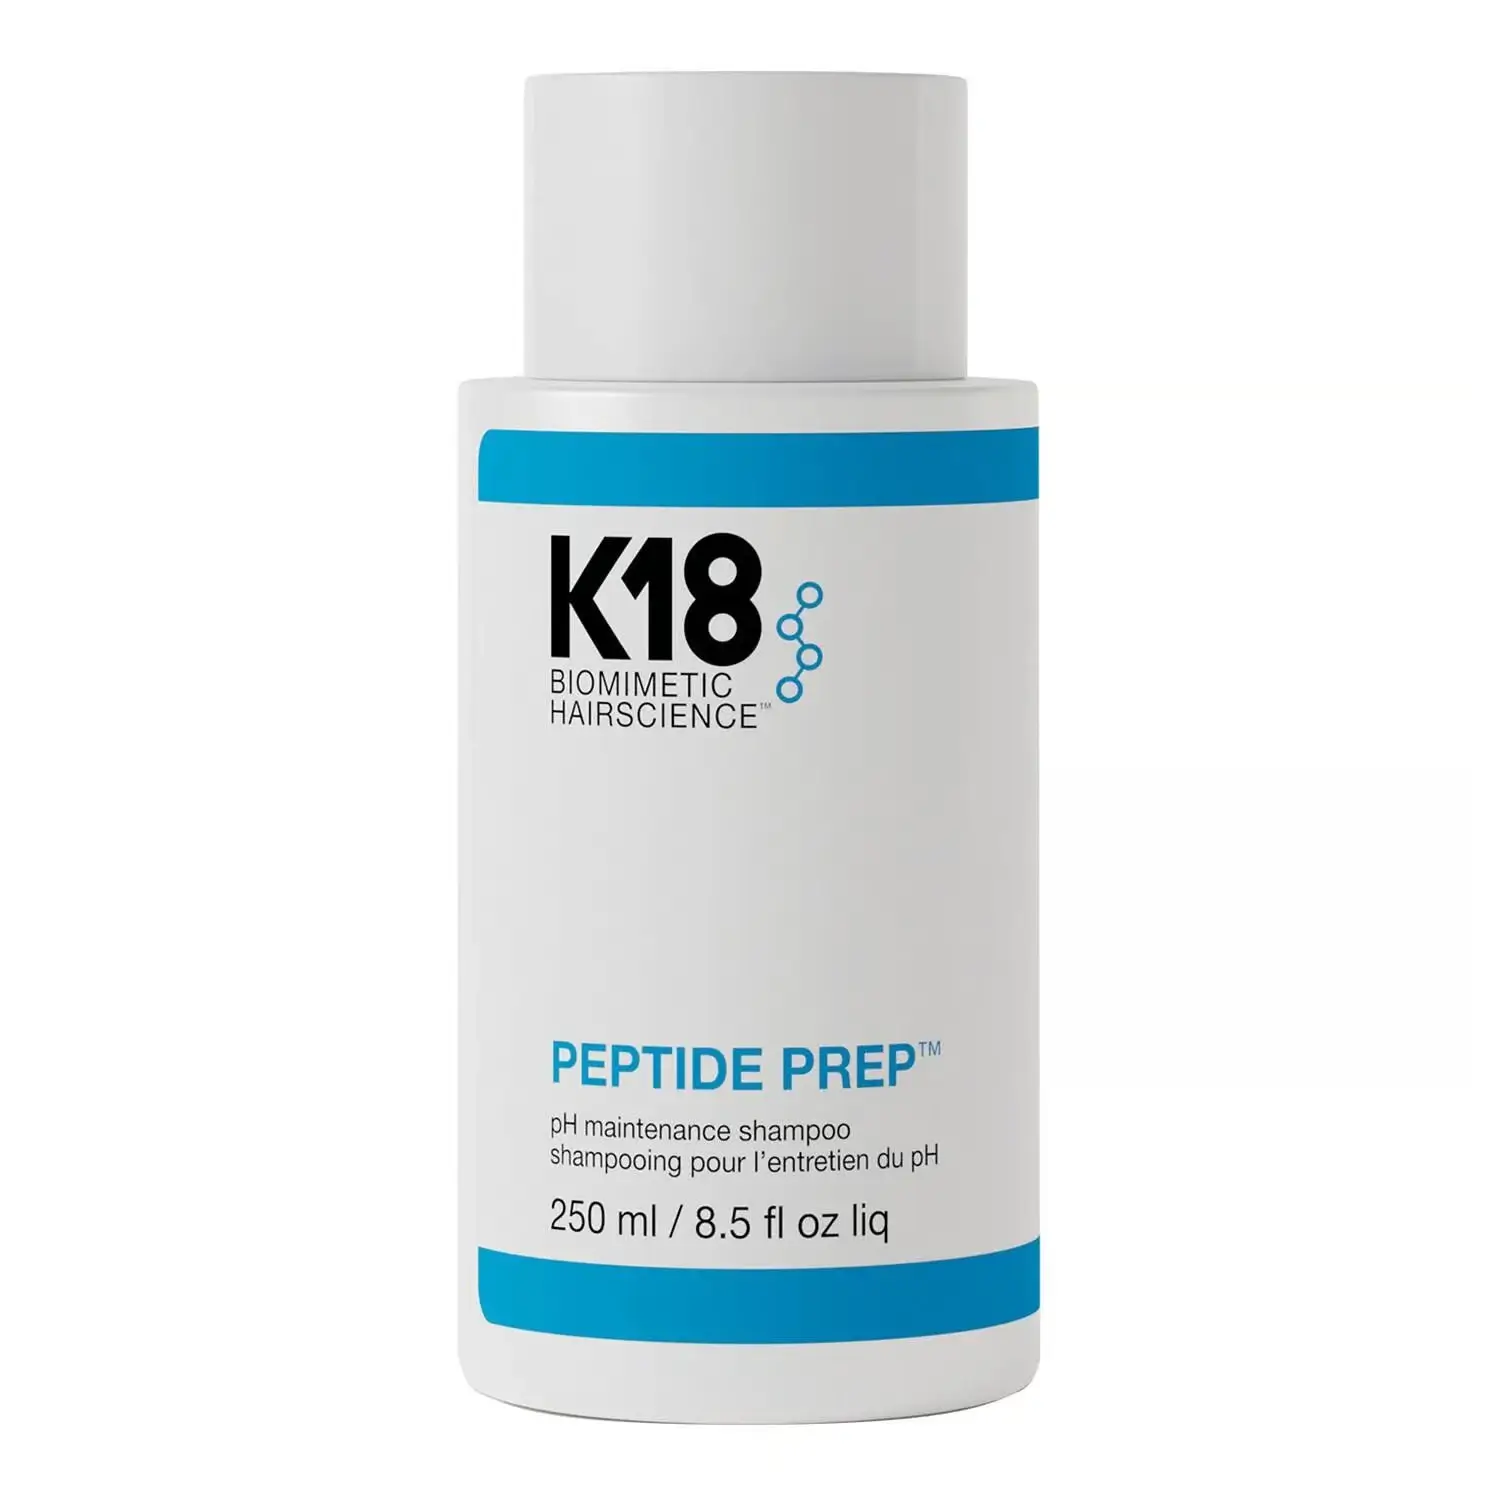 K18 Peptide Prep pH Maintenance Shampoo 250ml Discounts and Cashback